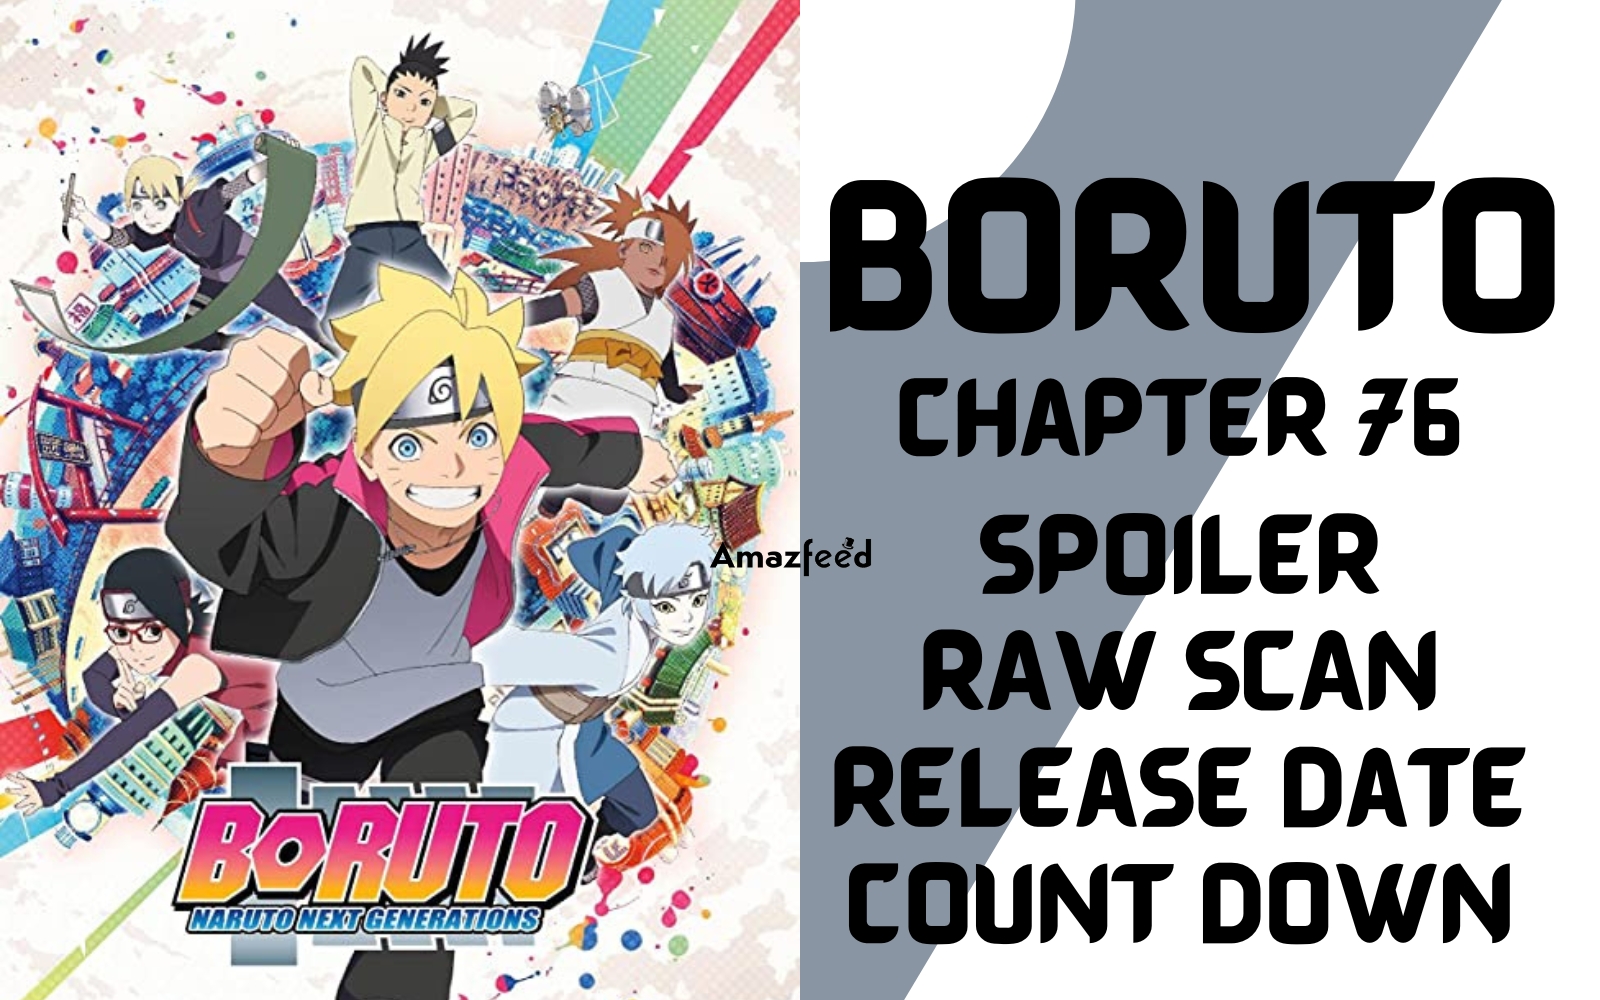 Boruto chapter 76 early spoilers leak online, release details confirmed